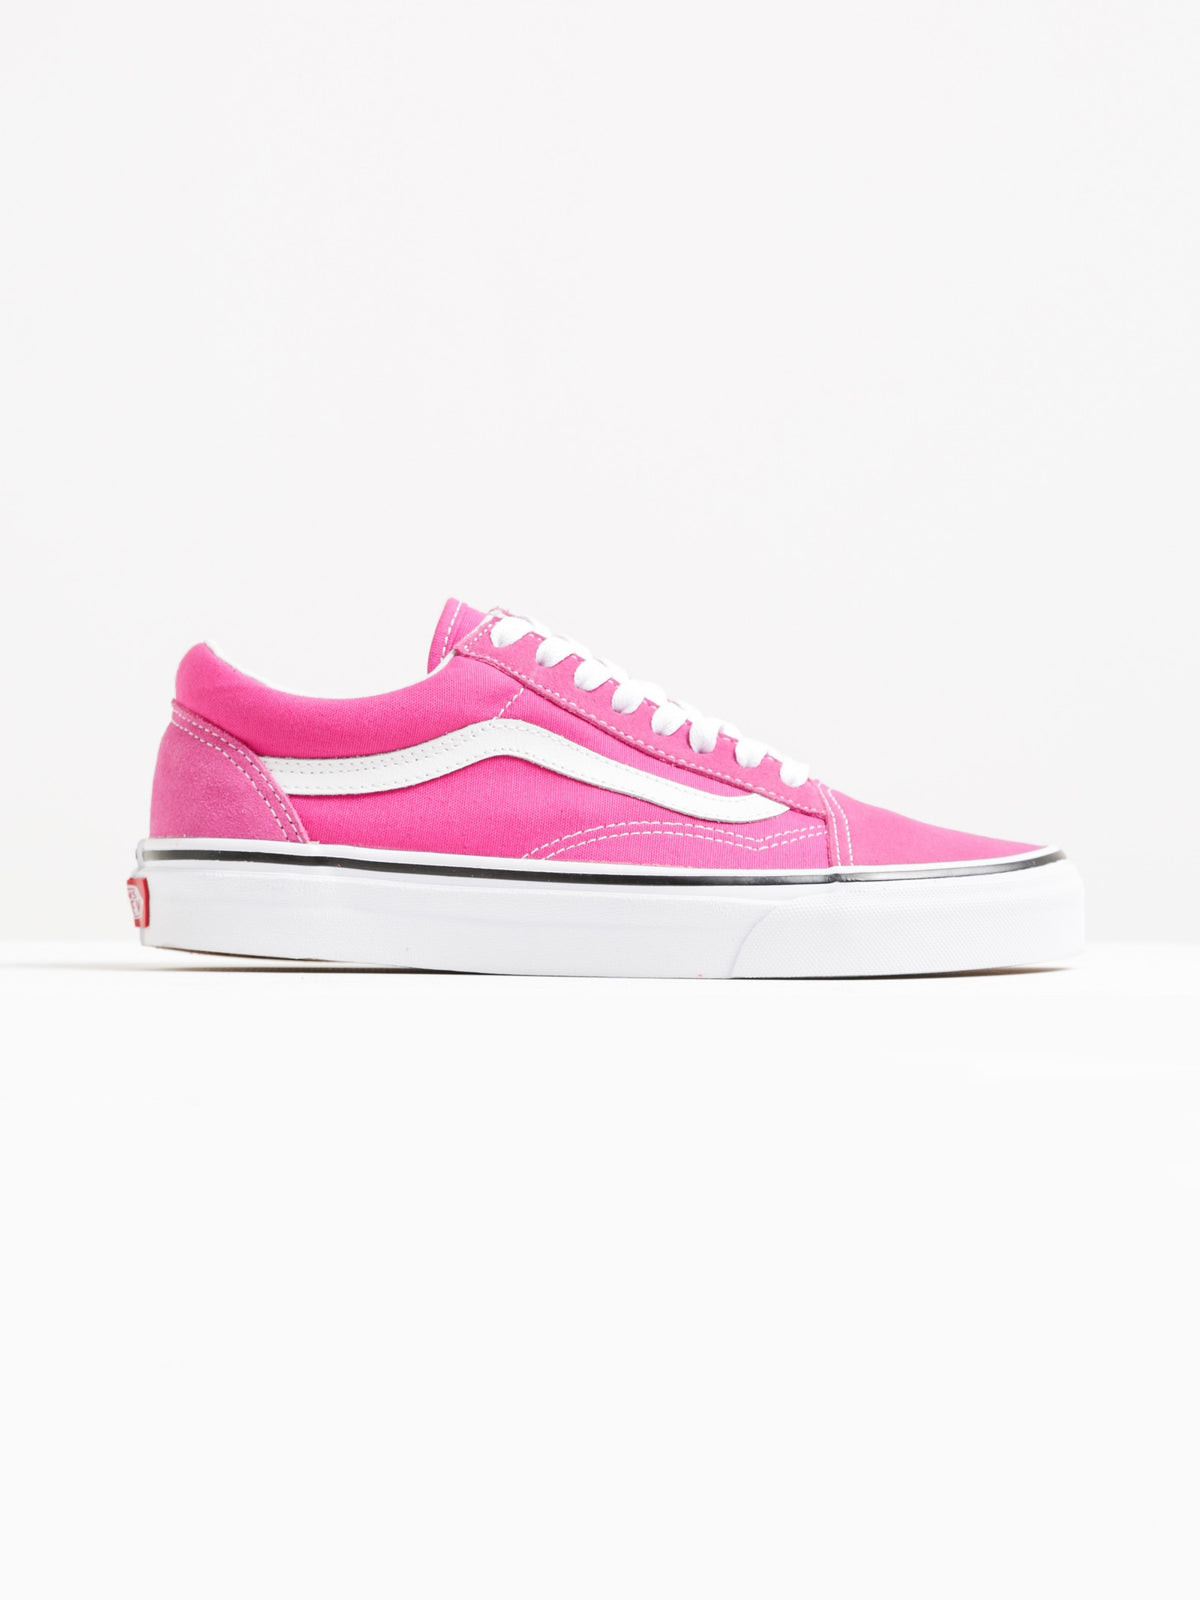 Womens Old Skool Sneakers in Bright Pink Suede &amp; Canvas